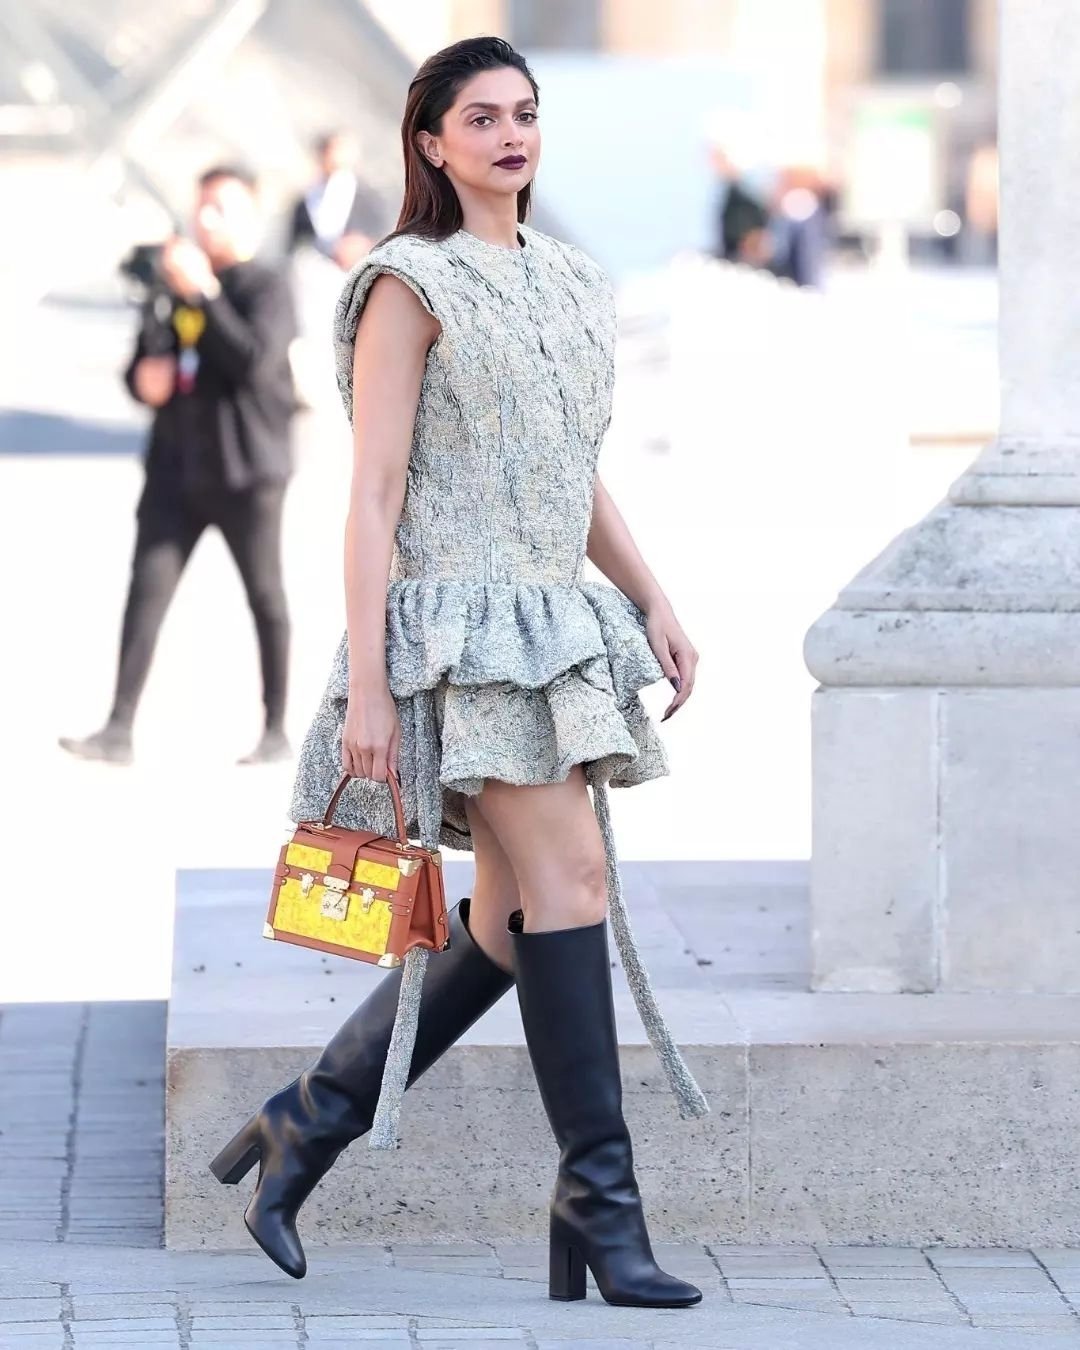 Chipku Media on X: Deepika Padukone at Louis Vuitton Paris show in a mini  dress is a treat for sore eyes. #deepika #deepikapadukone  #deepikapadukonehot #louisvuitton #louisvuittonbag #lv #paris #actor  #bollywood #fashion #style #